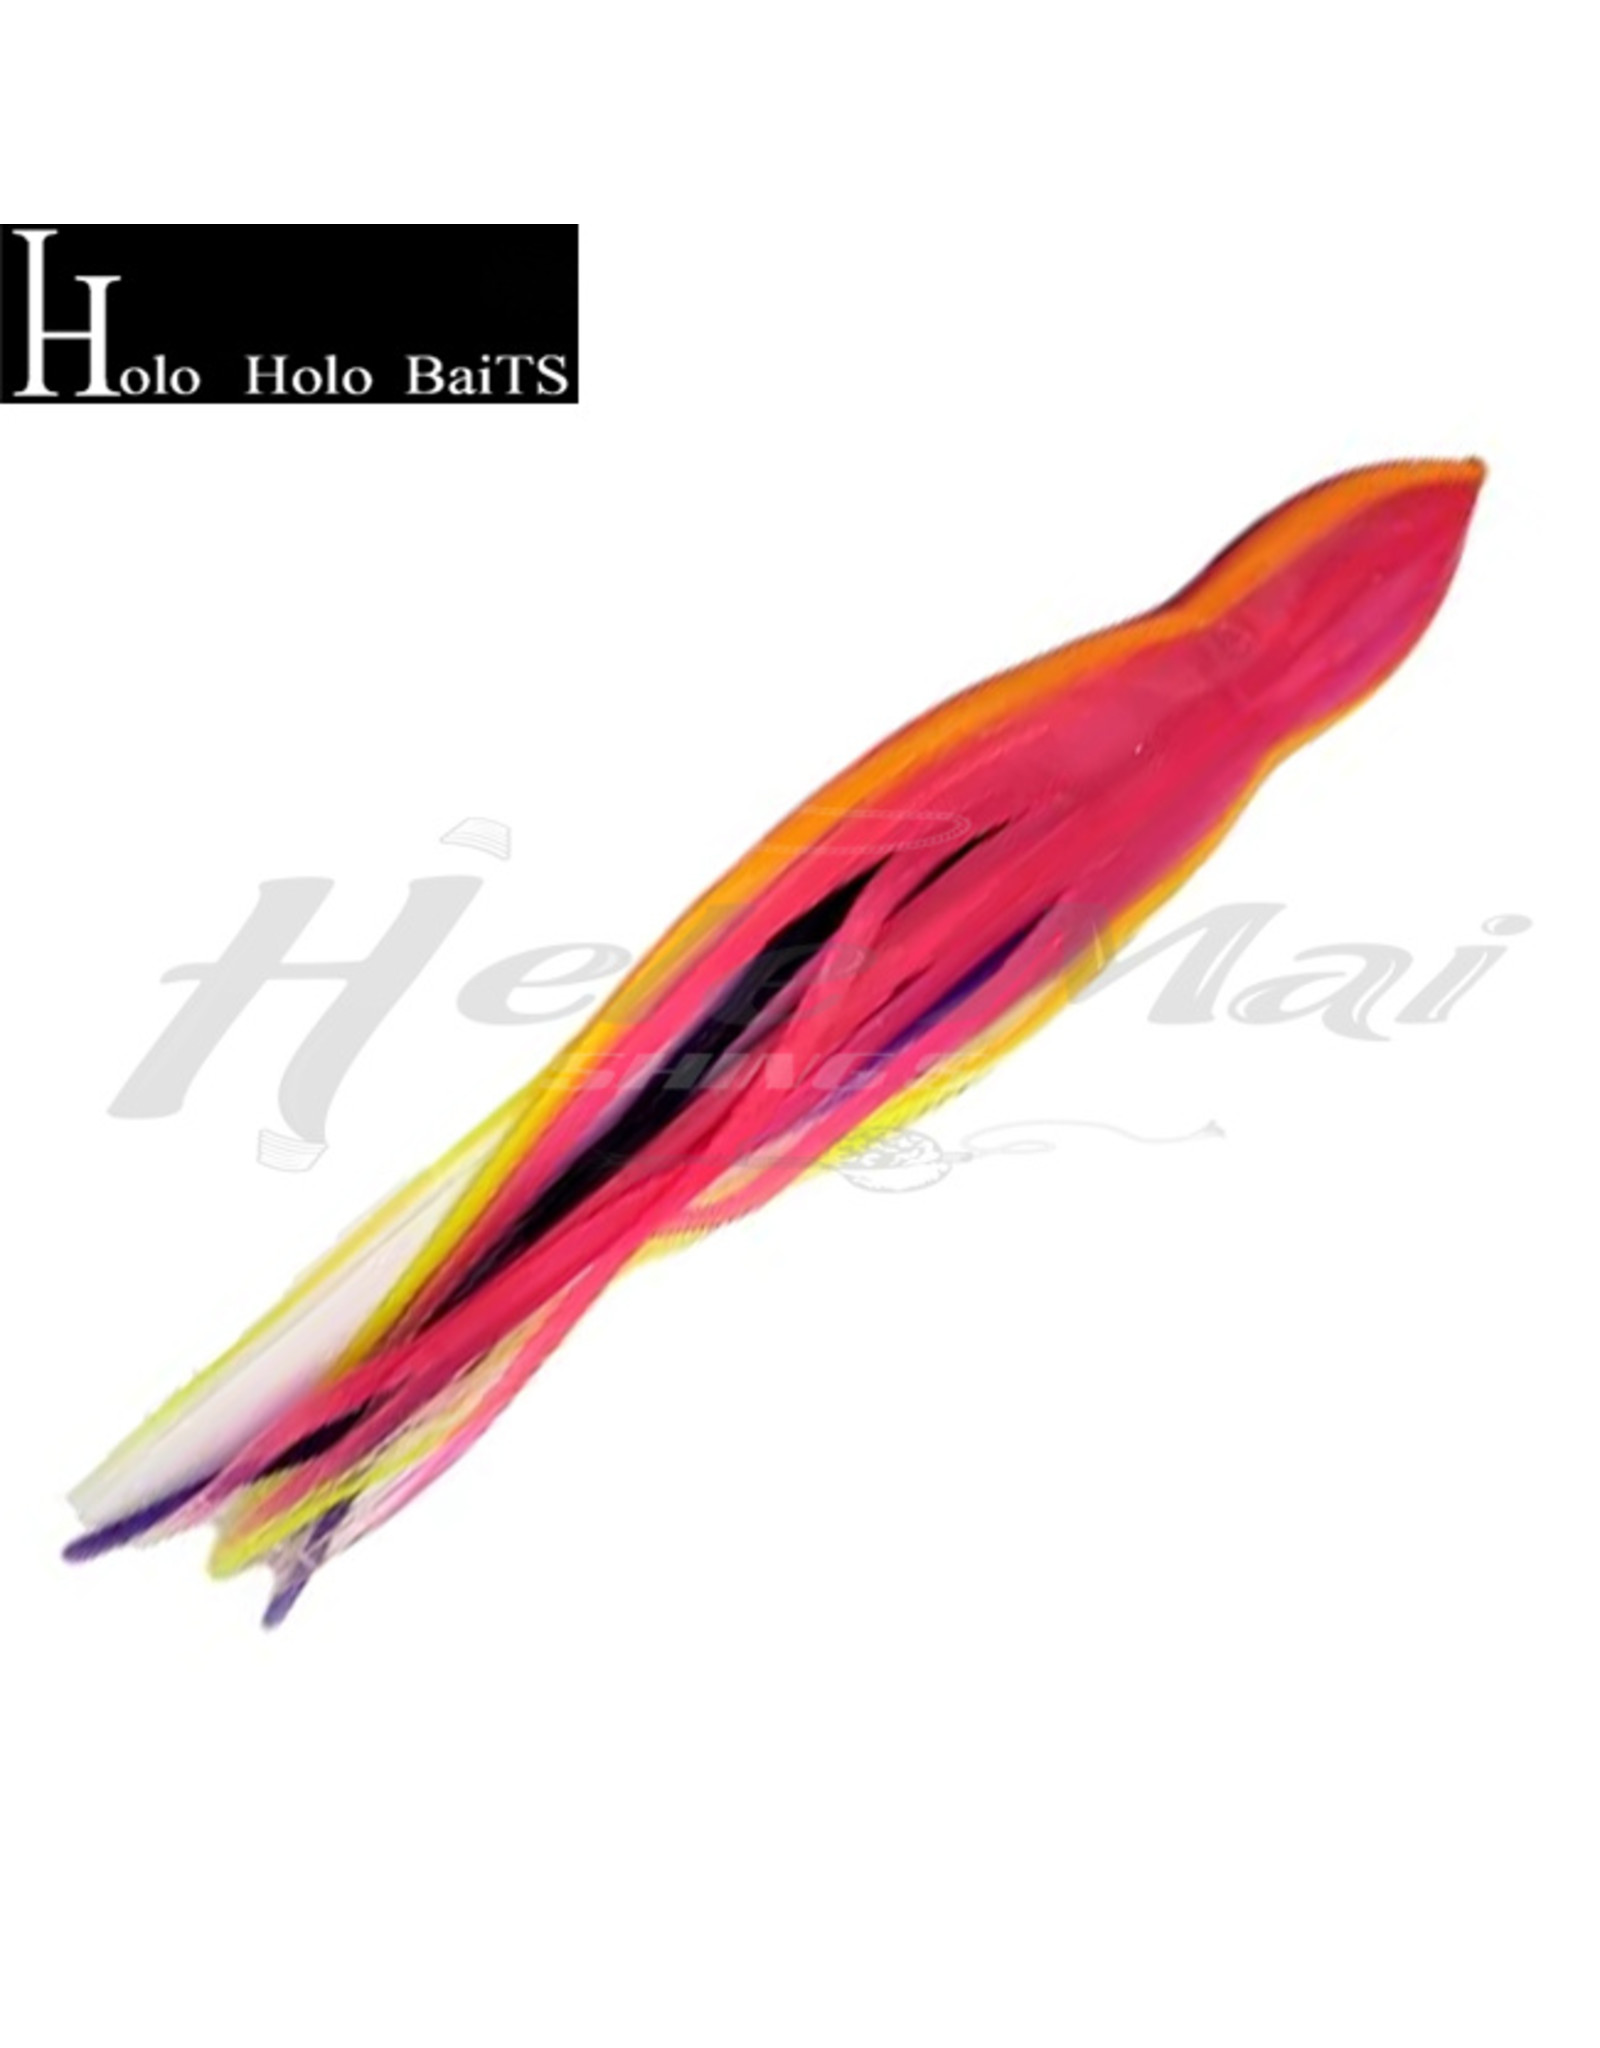 HOLO HOLO HAWAII (HHH) HH, 9" SQUID SKIRT PURPLE/YELLOW/PINK TL623